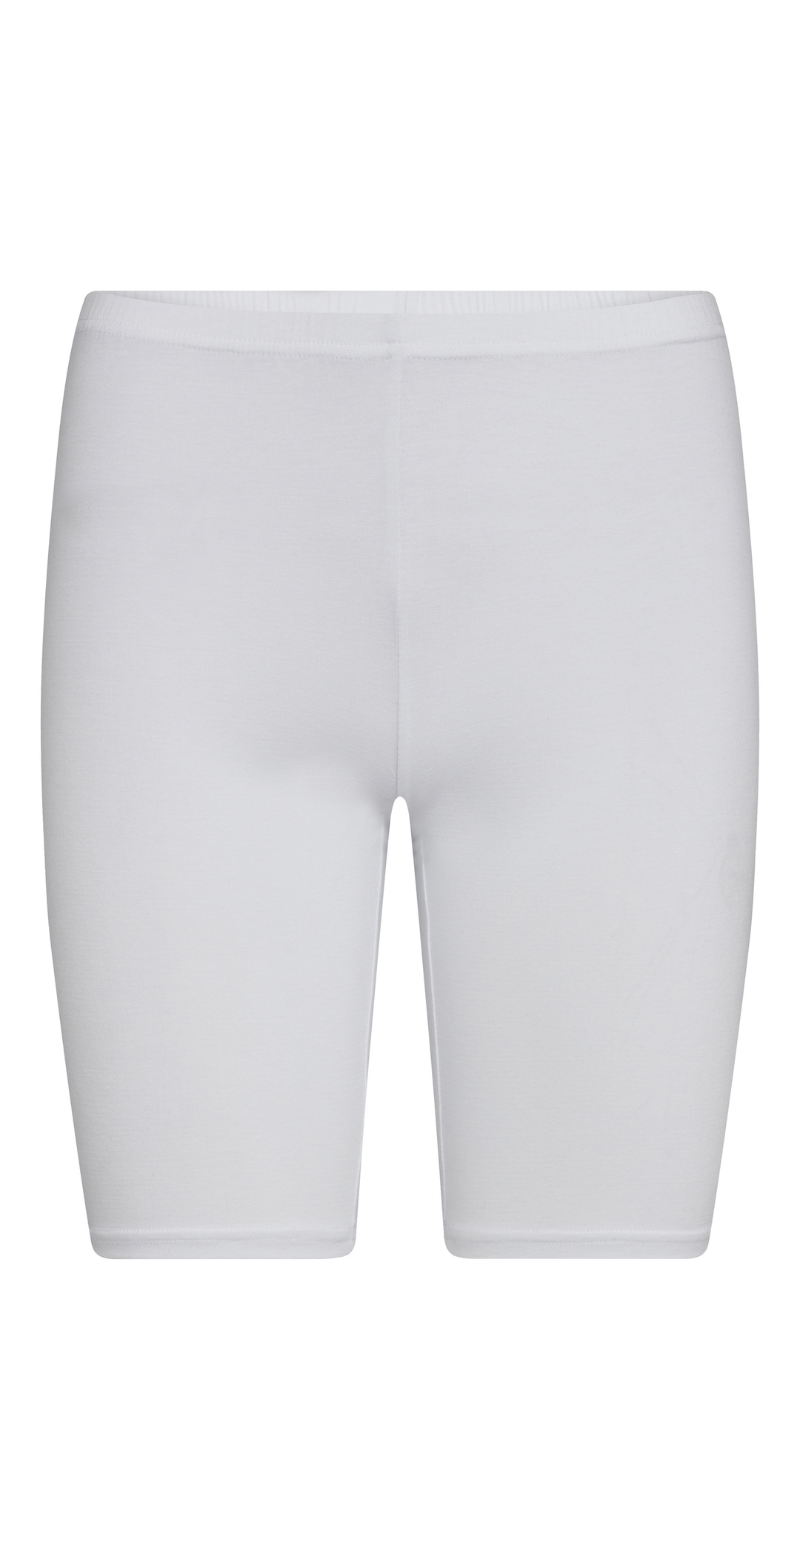 decoy hvid shorts